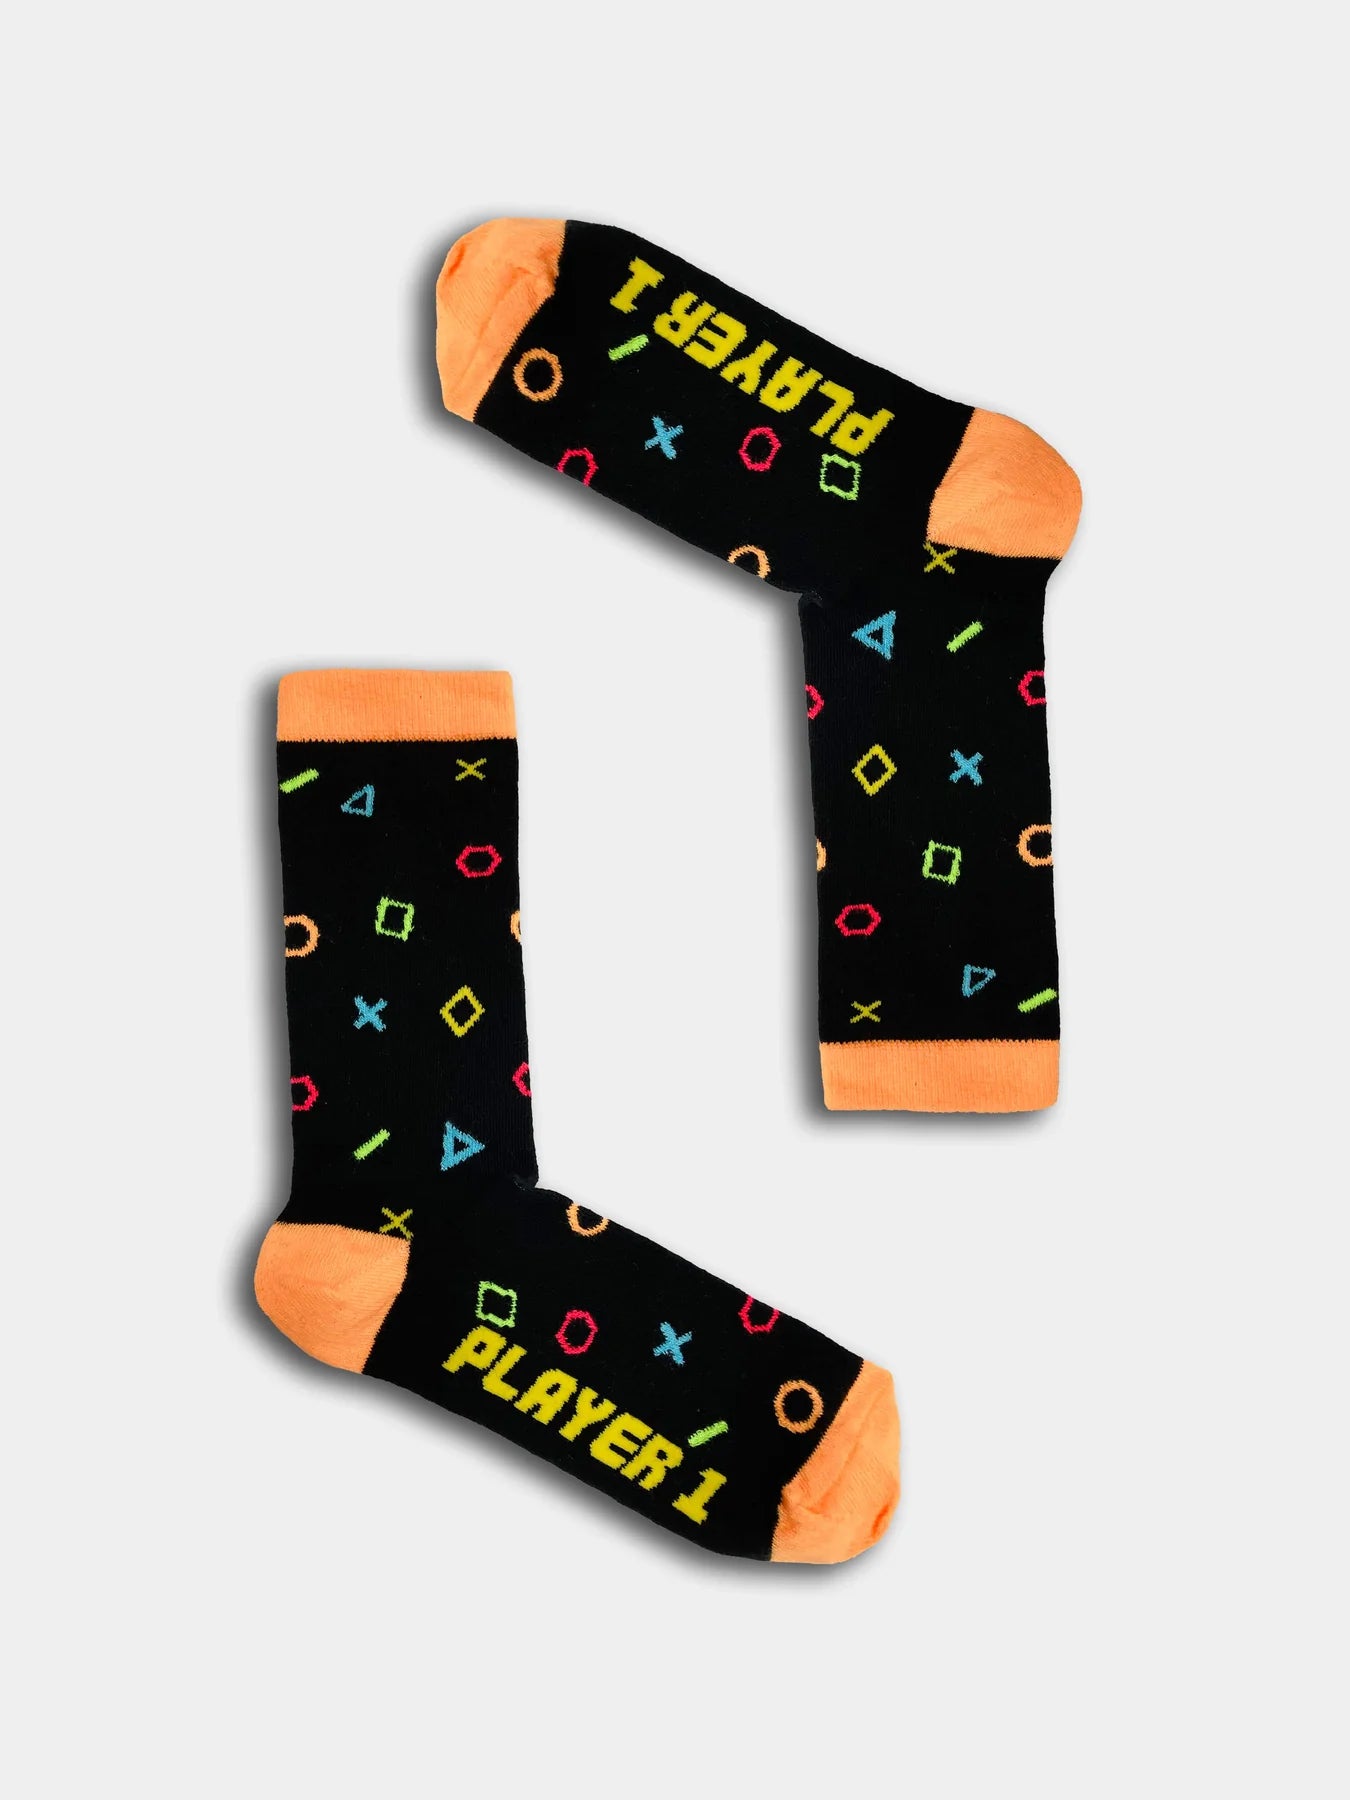 Gaming Socks